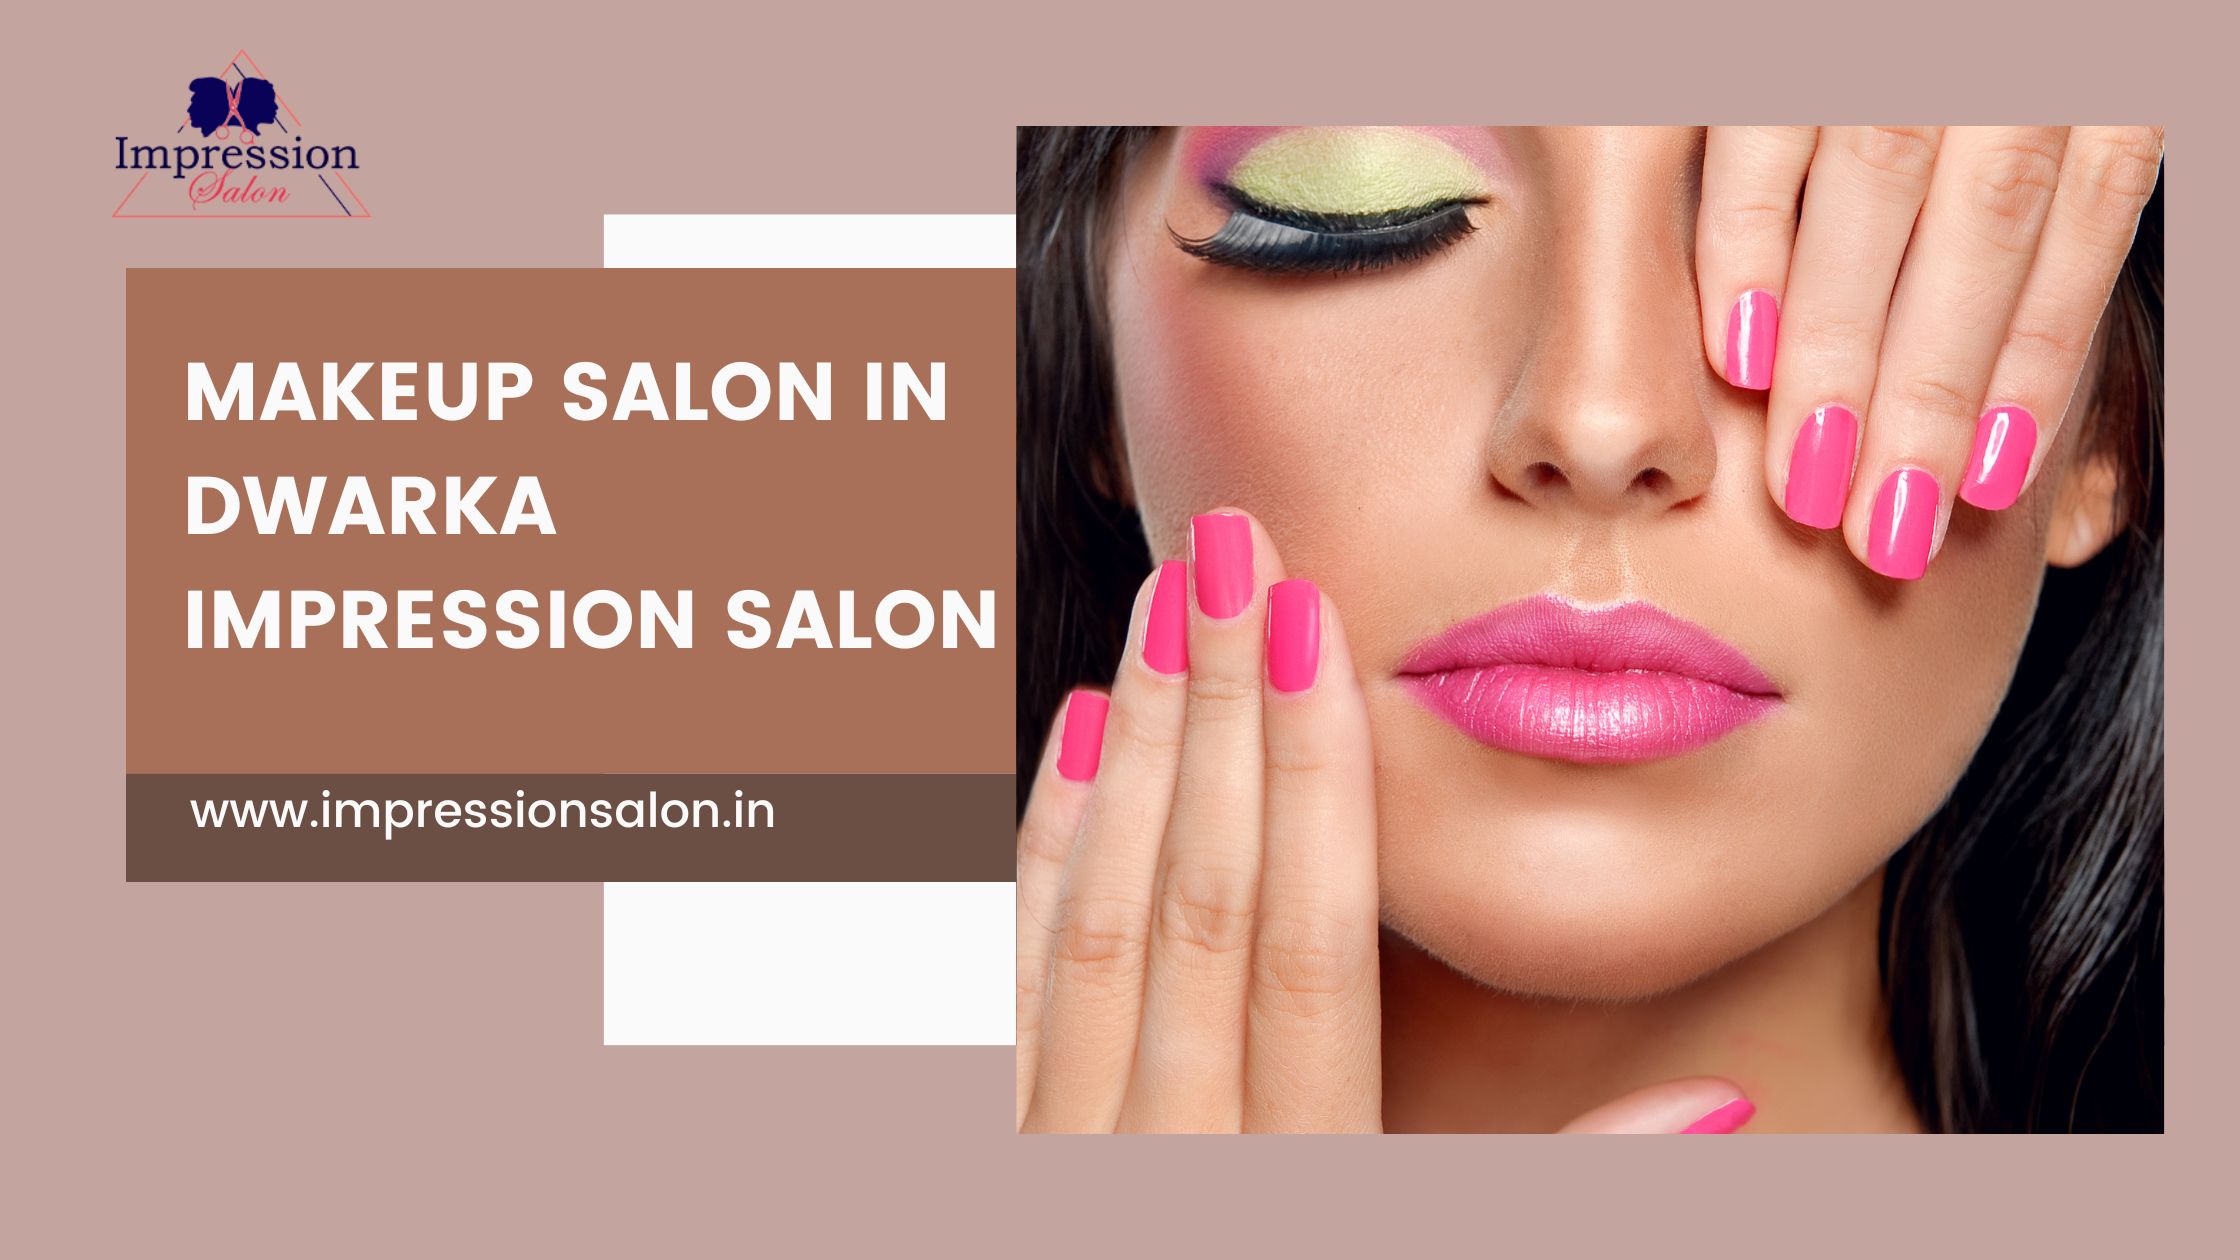 Makeup Salon in Dwarka  Impression salon